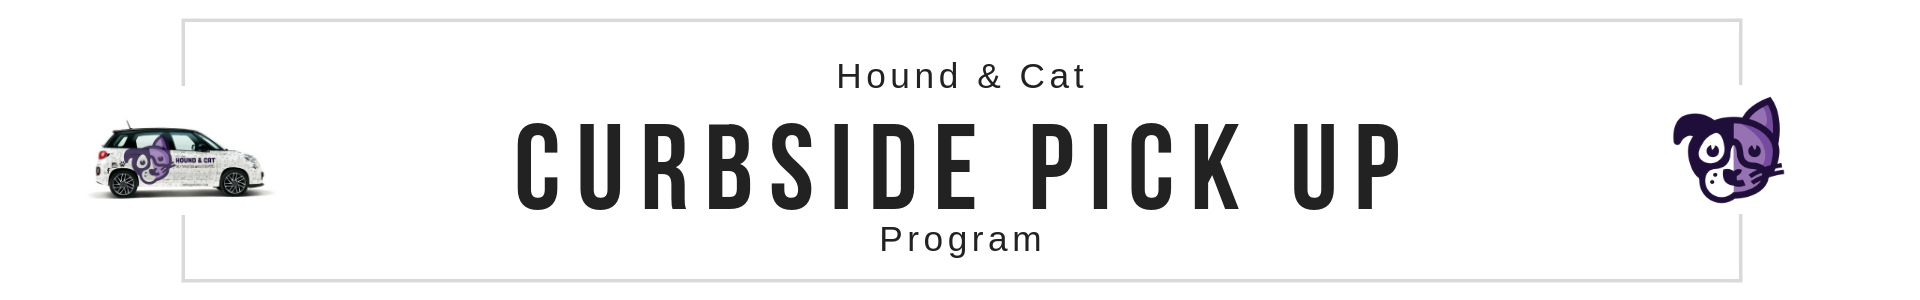 Hound & Cat Curbside Pick Up Draper Utah